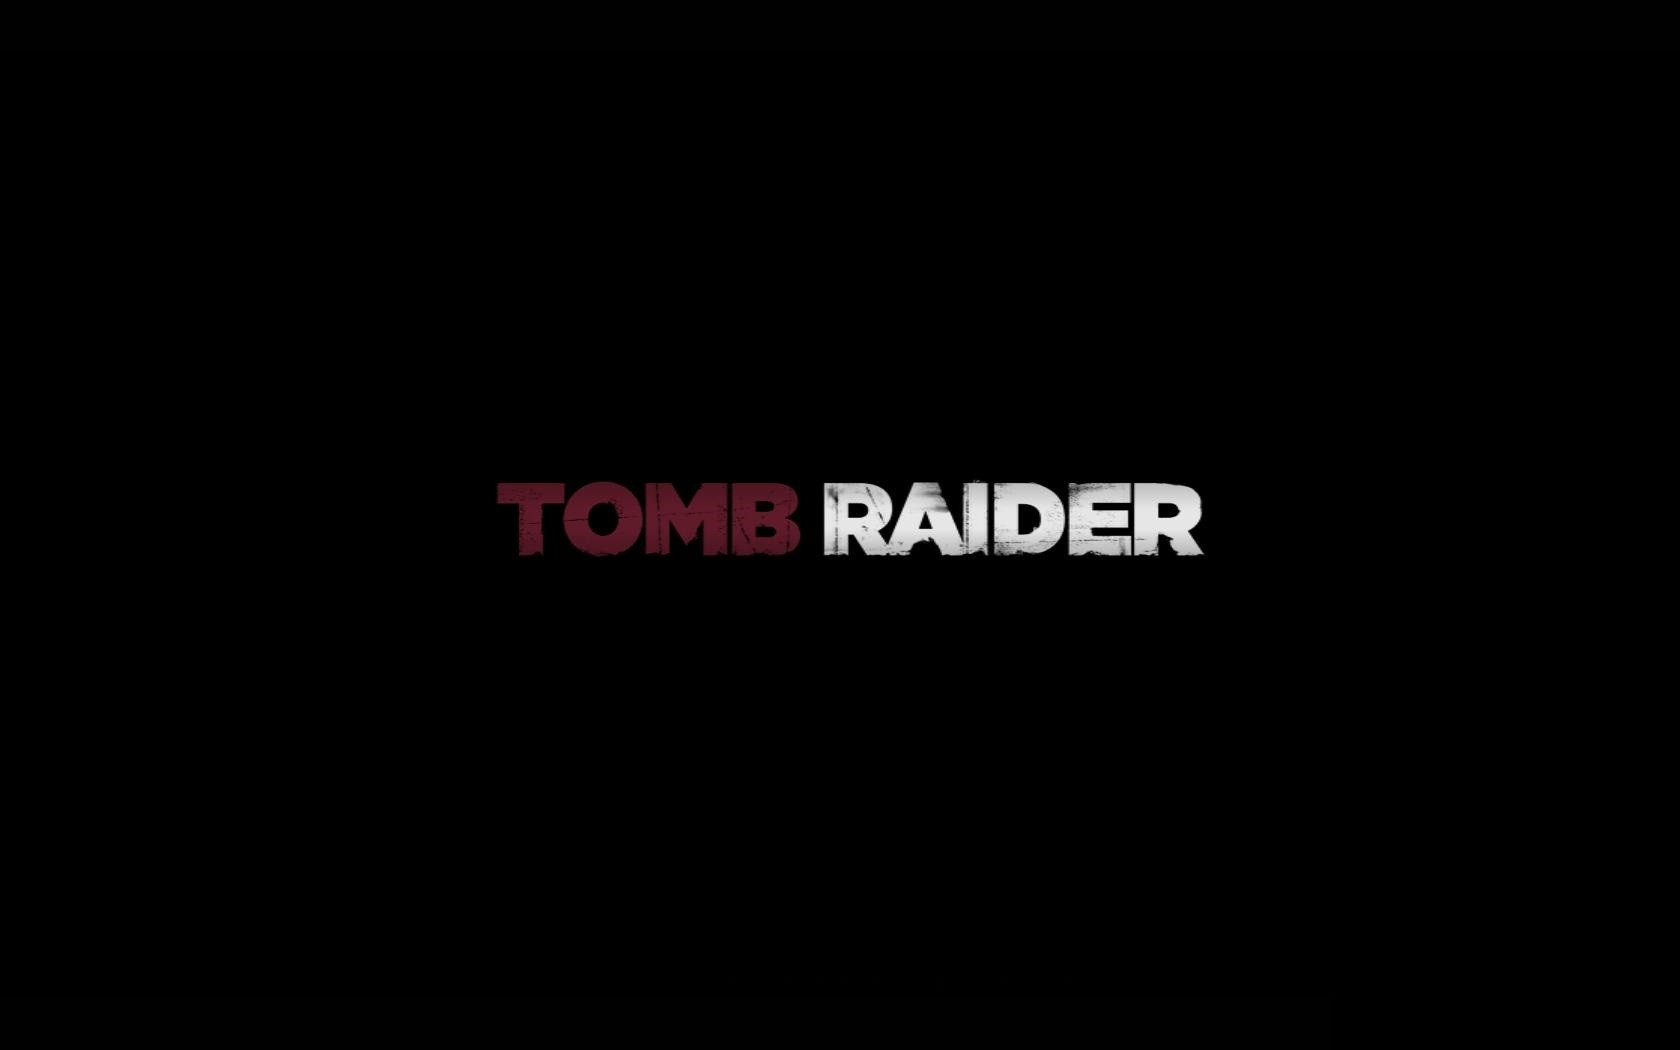 General 1680x1050 Tomb Raider video games minimalism simple background typography logo PC gaming